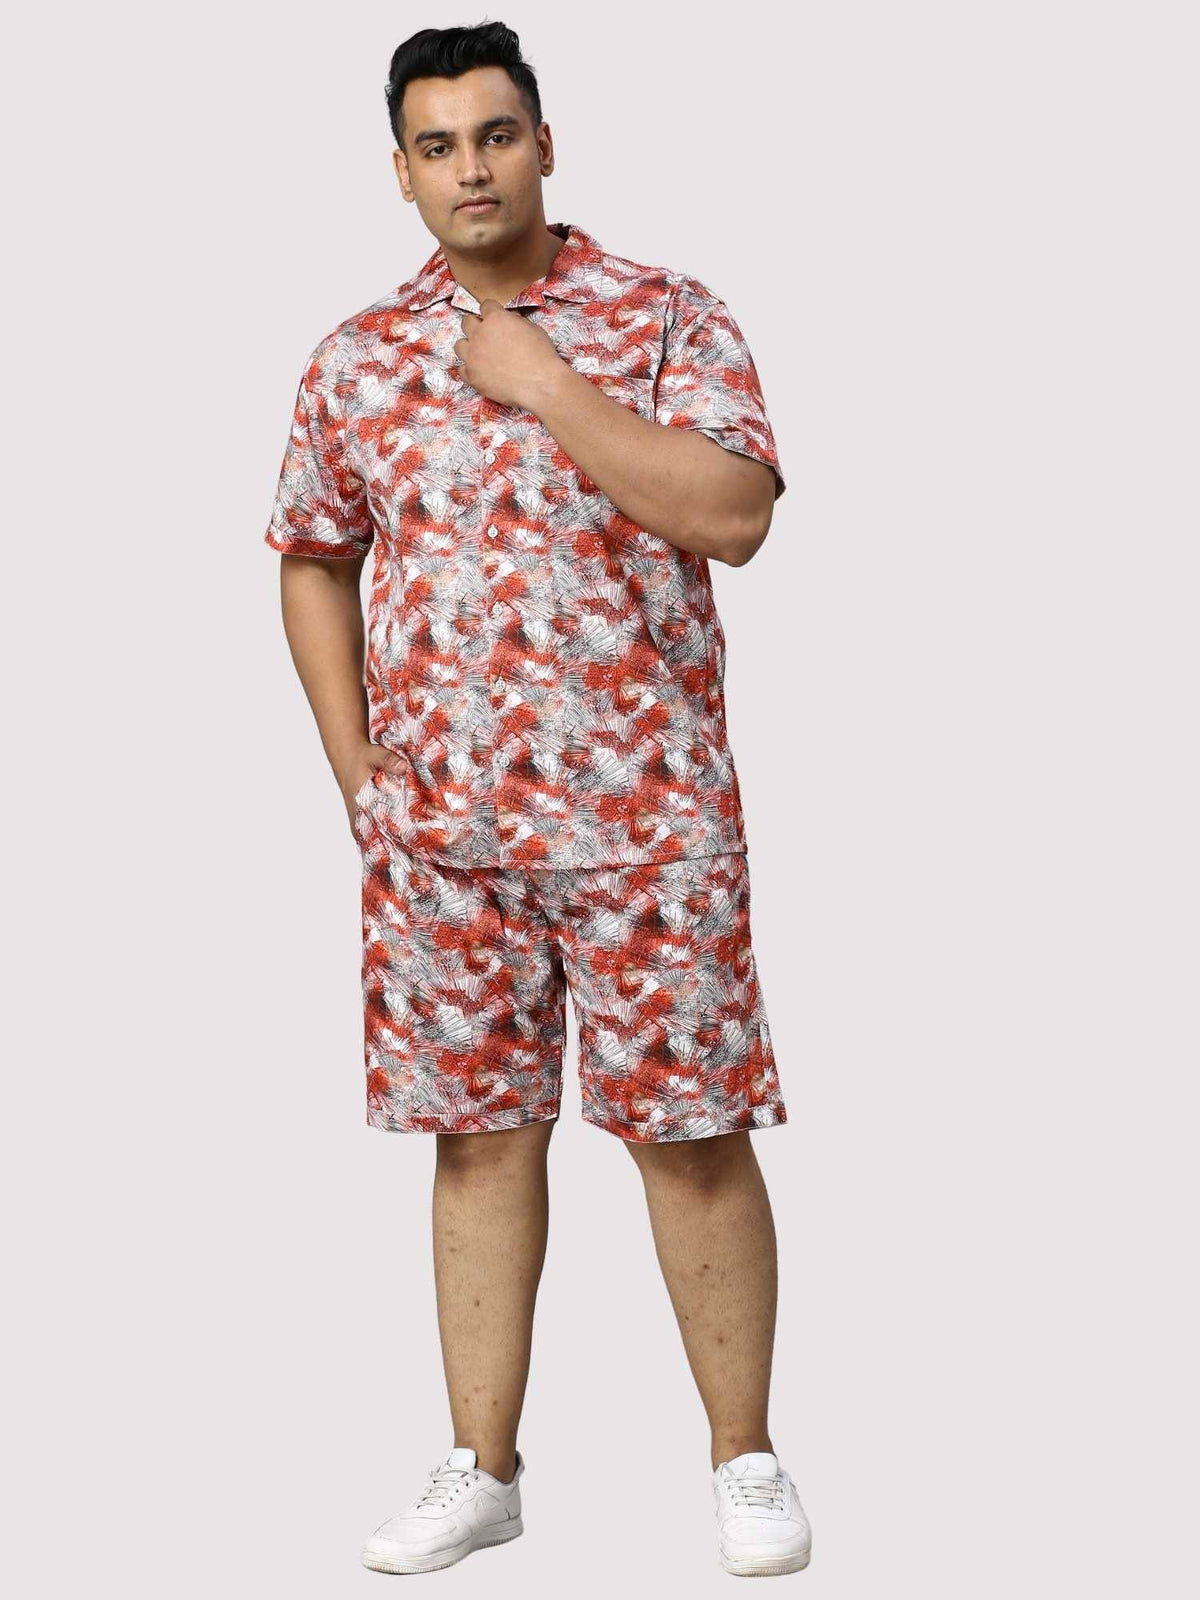 Apple Blossom Digital Printed Half Sleeve Co-Ords Men's Plus Size - Guniaa Fashions